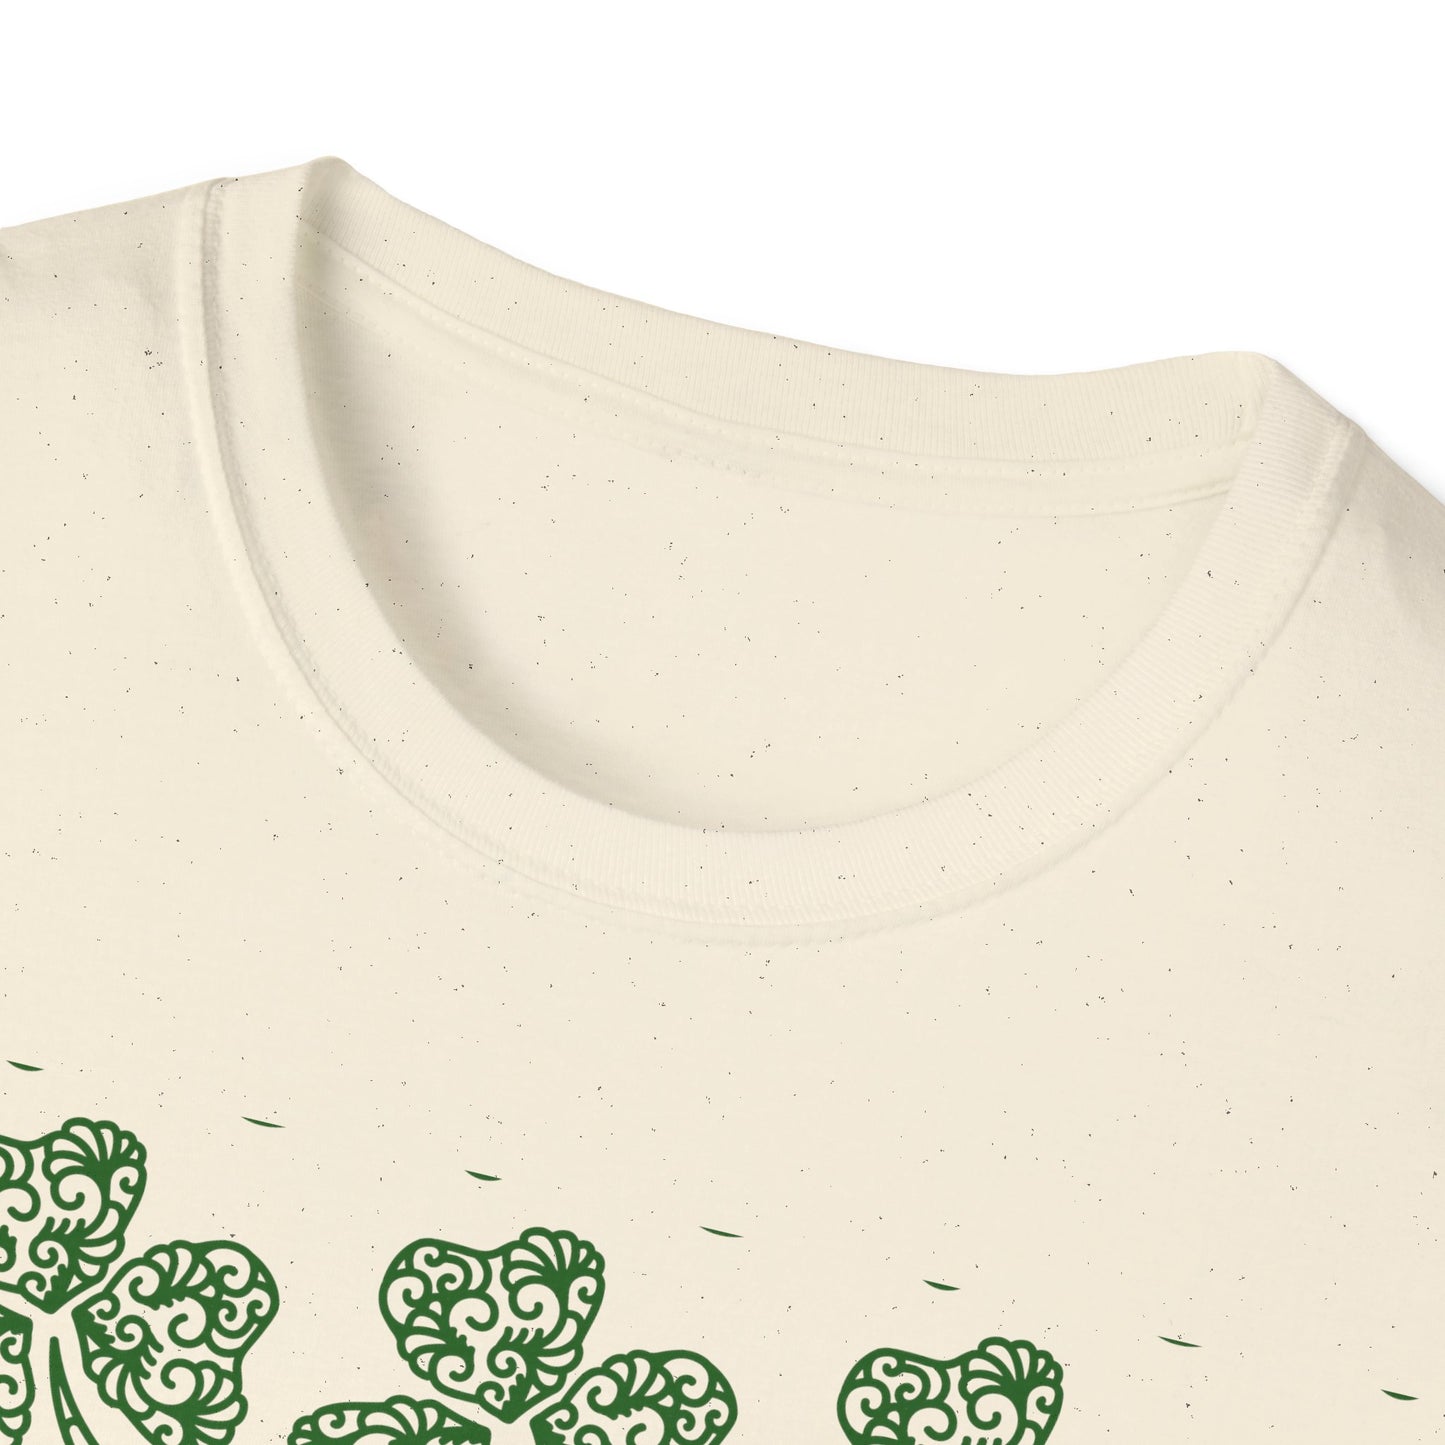 Unisex St. Patrick's Day T Shirt